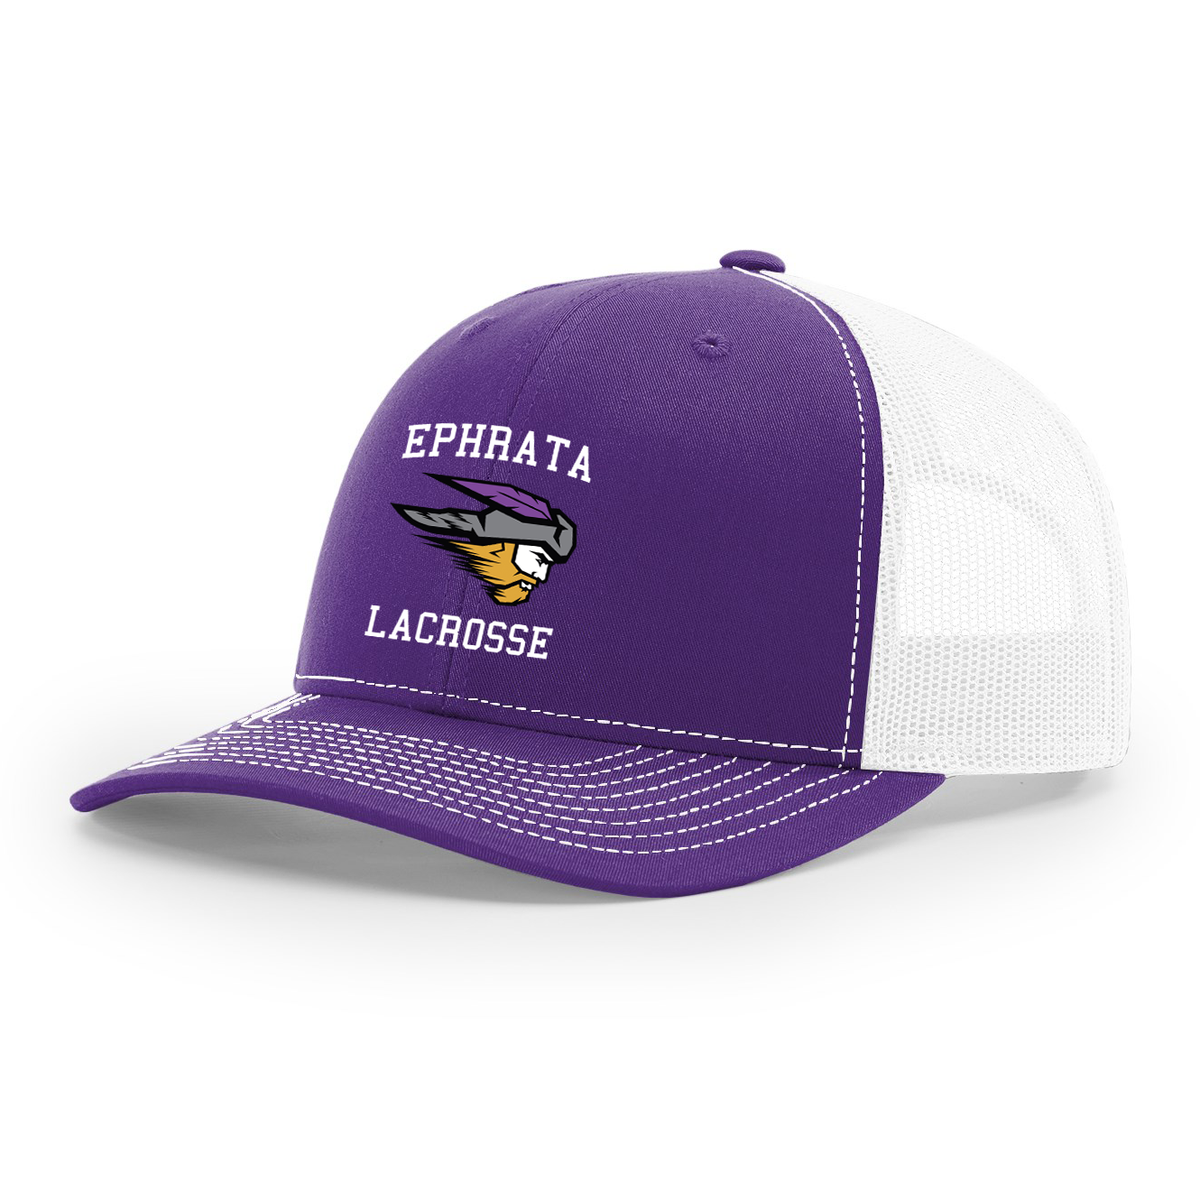 Ephrata Lacrosse Richardson Snapback Trucker Cap